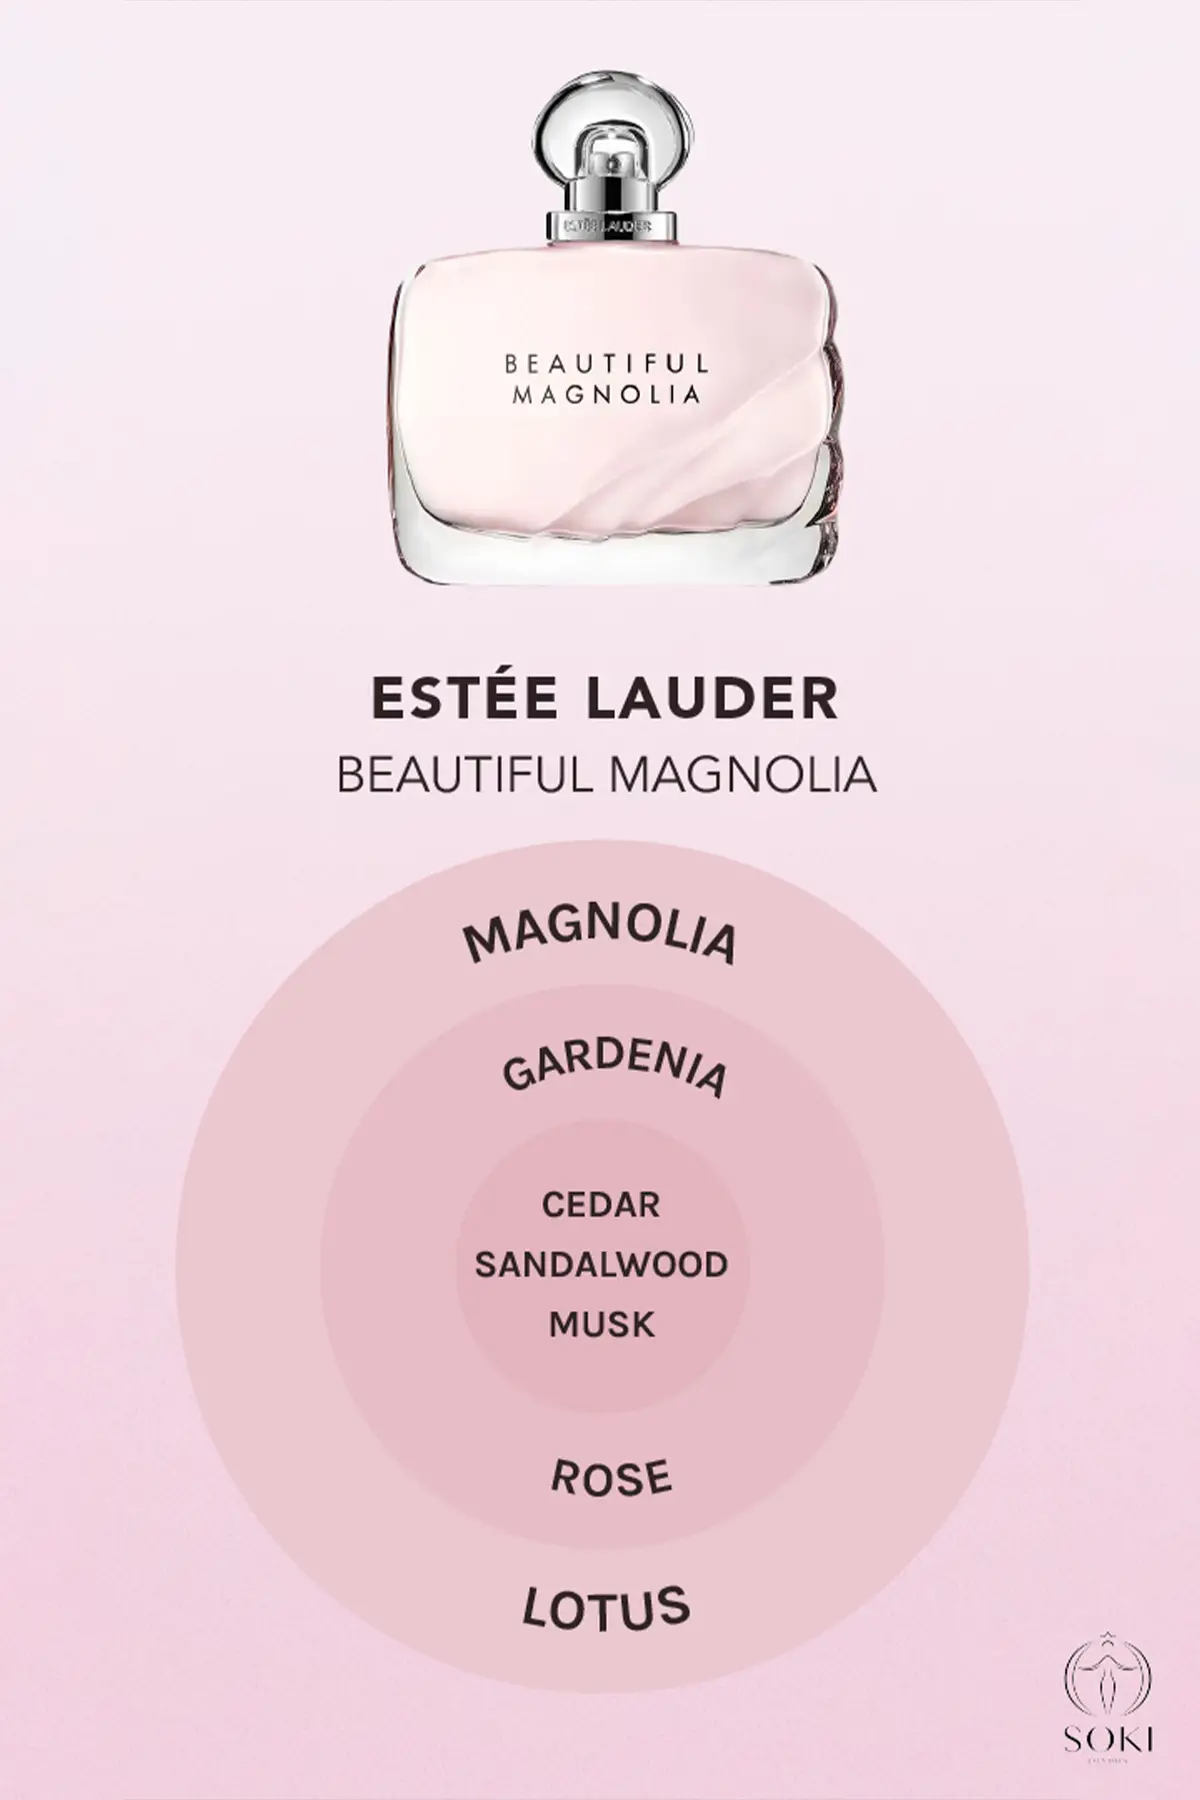 Hoa mộc lan xinh đẹp của Estée Lauder